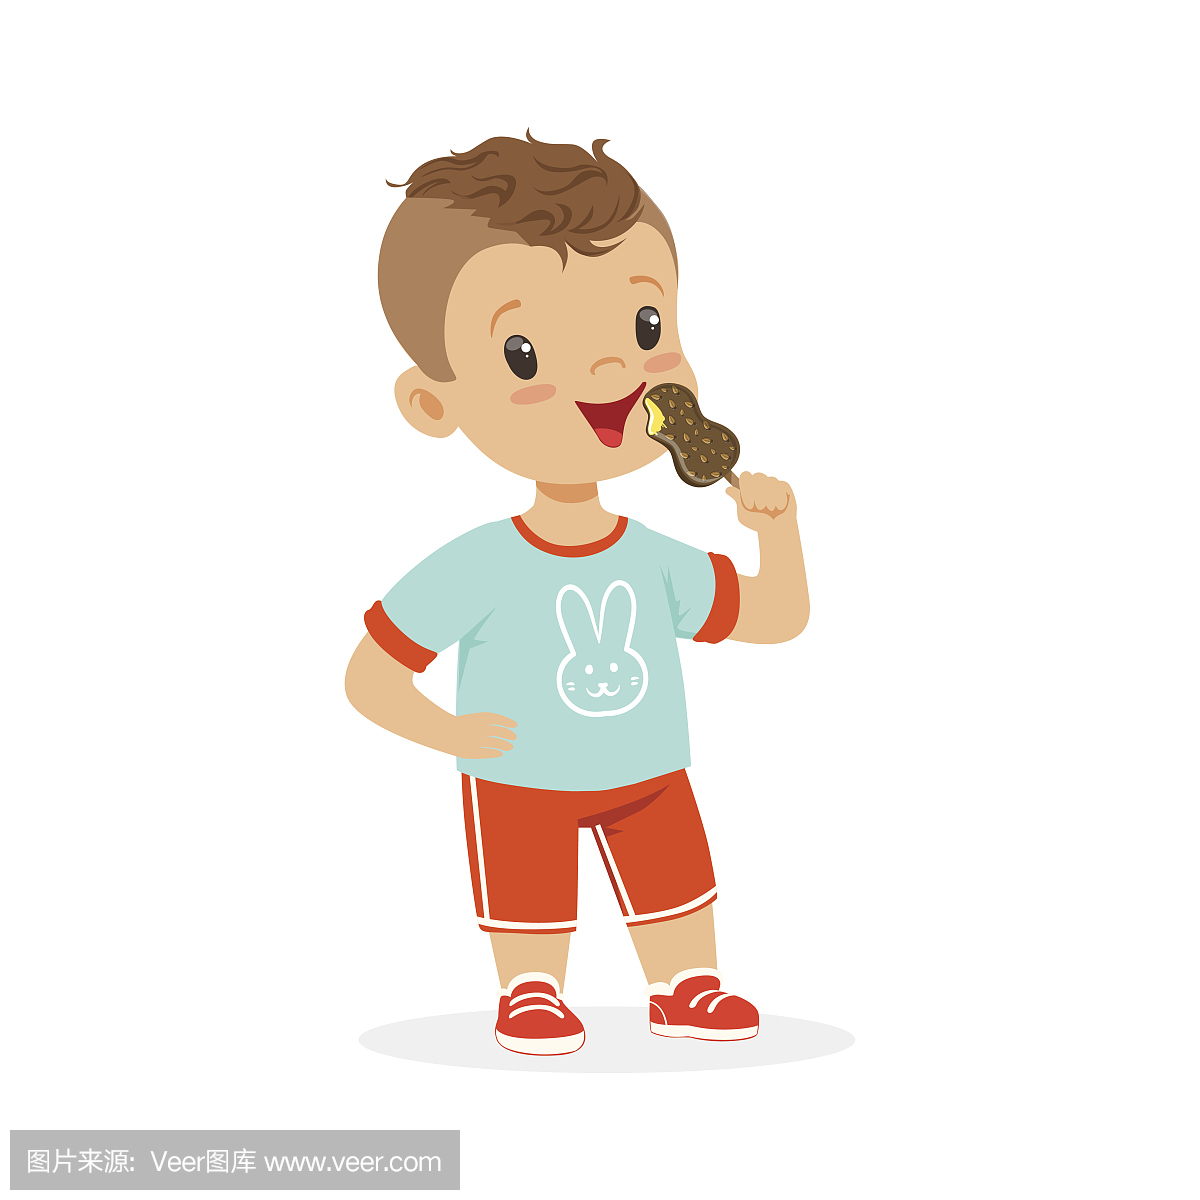 Cute little boy character eating ice cream carto